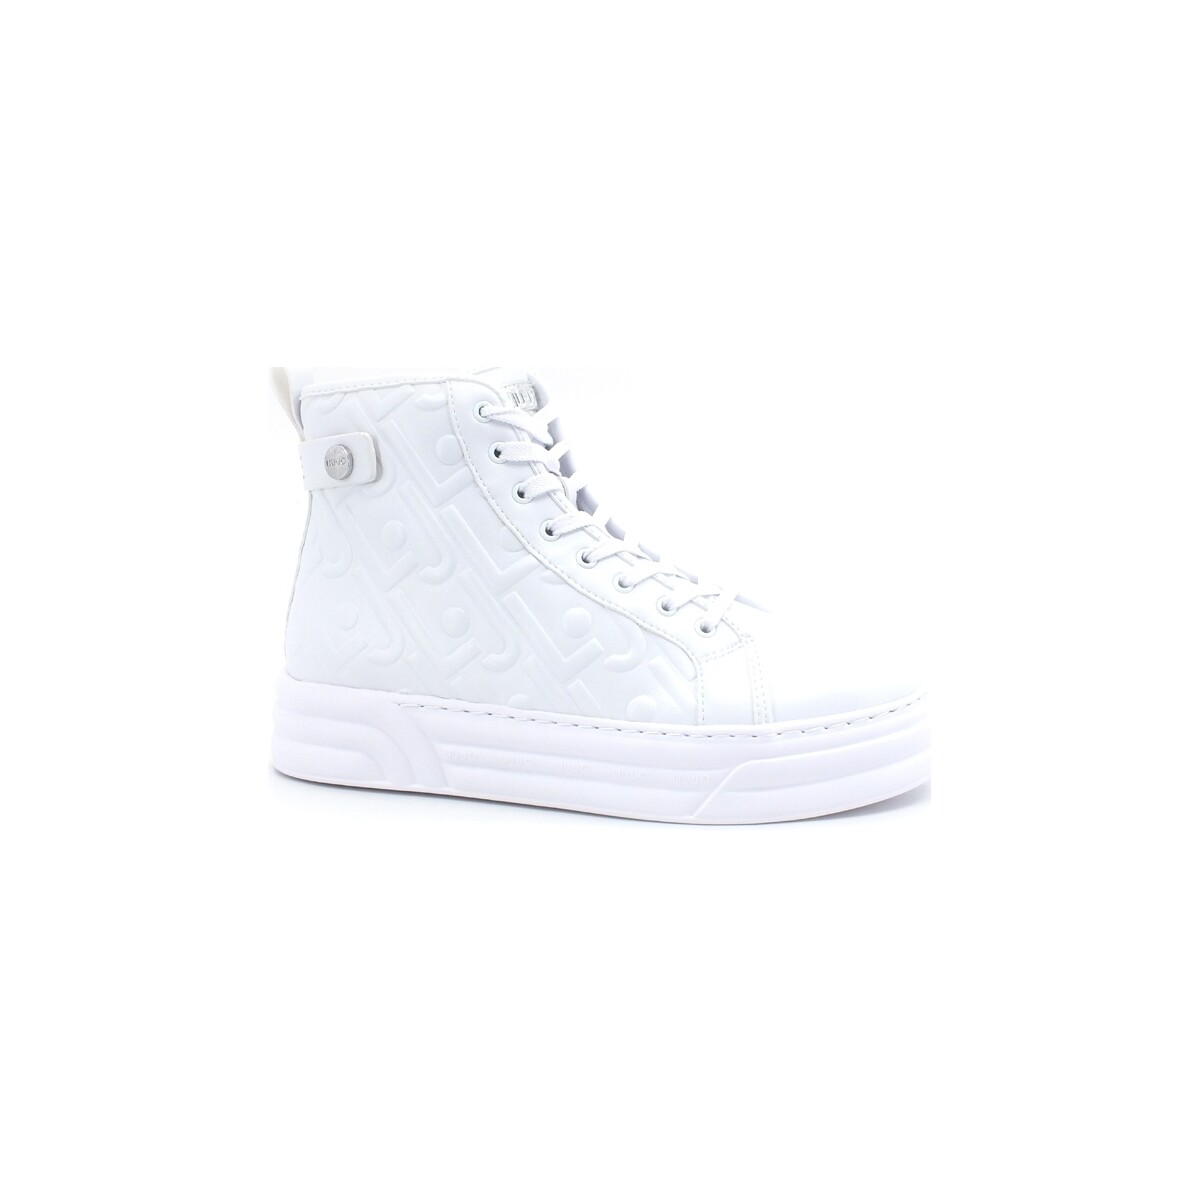 Chaussures Femme Bottes Liu Jo Cleo 05 Skeena Sneaker Mid Loghi White BA2041EX014 Blanc